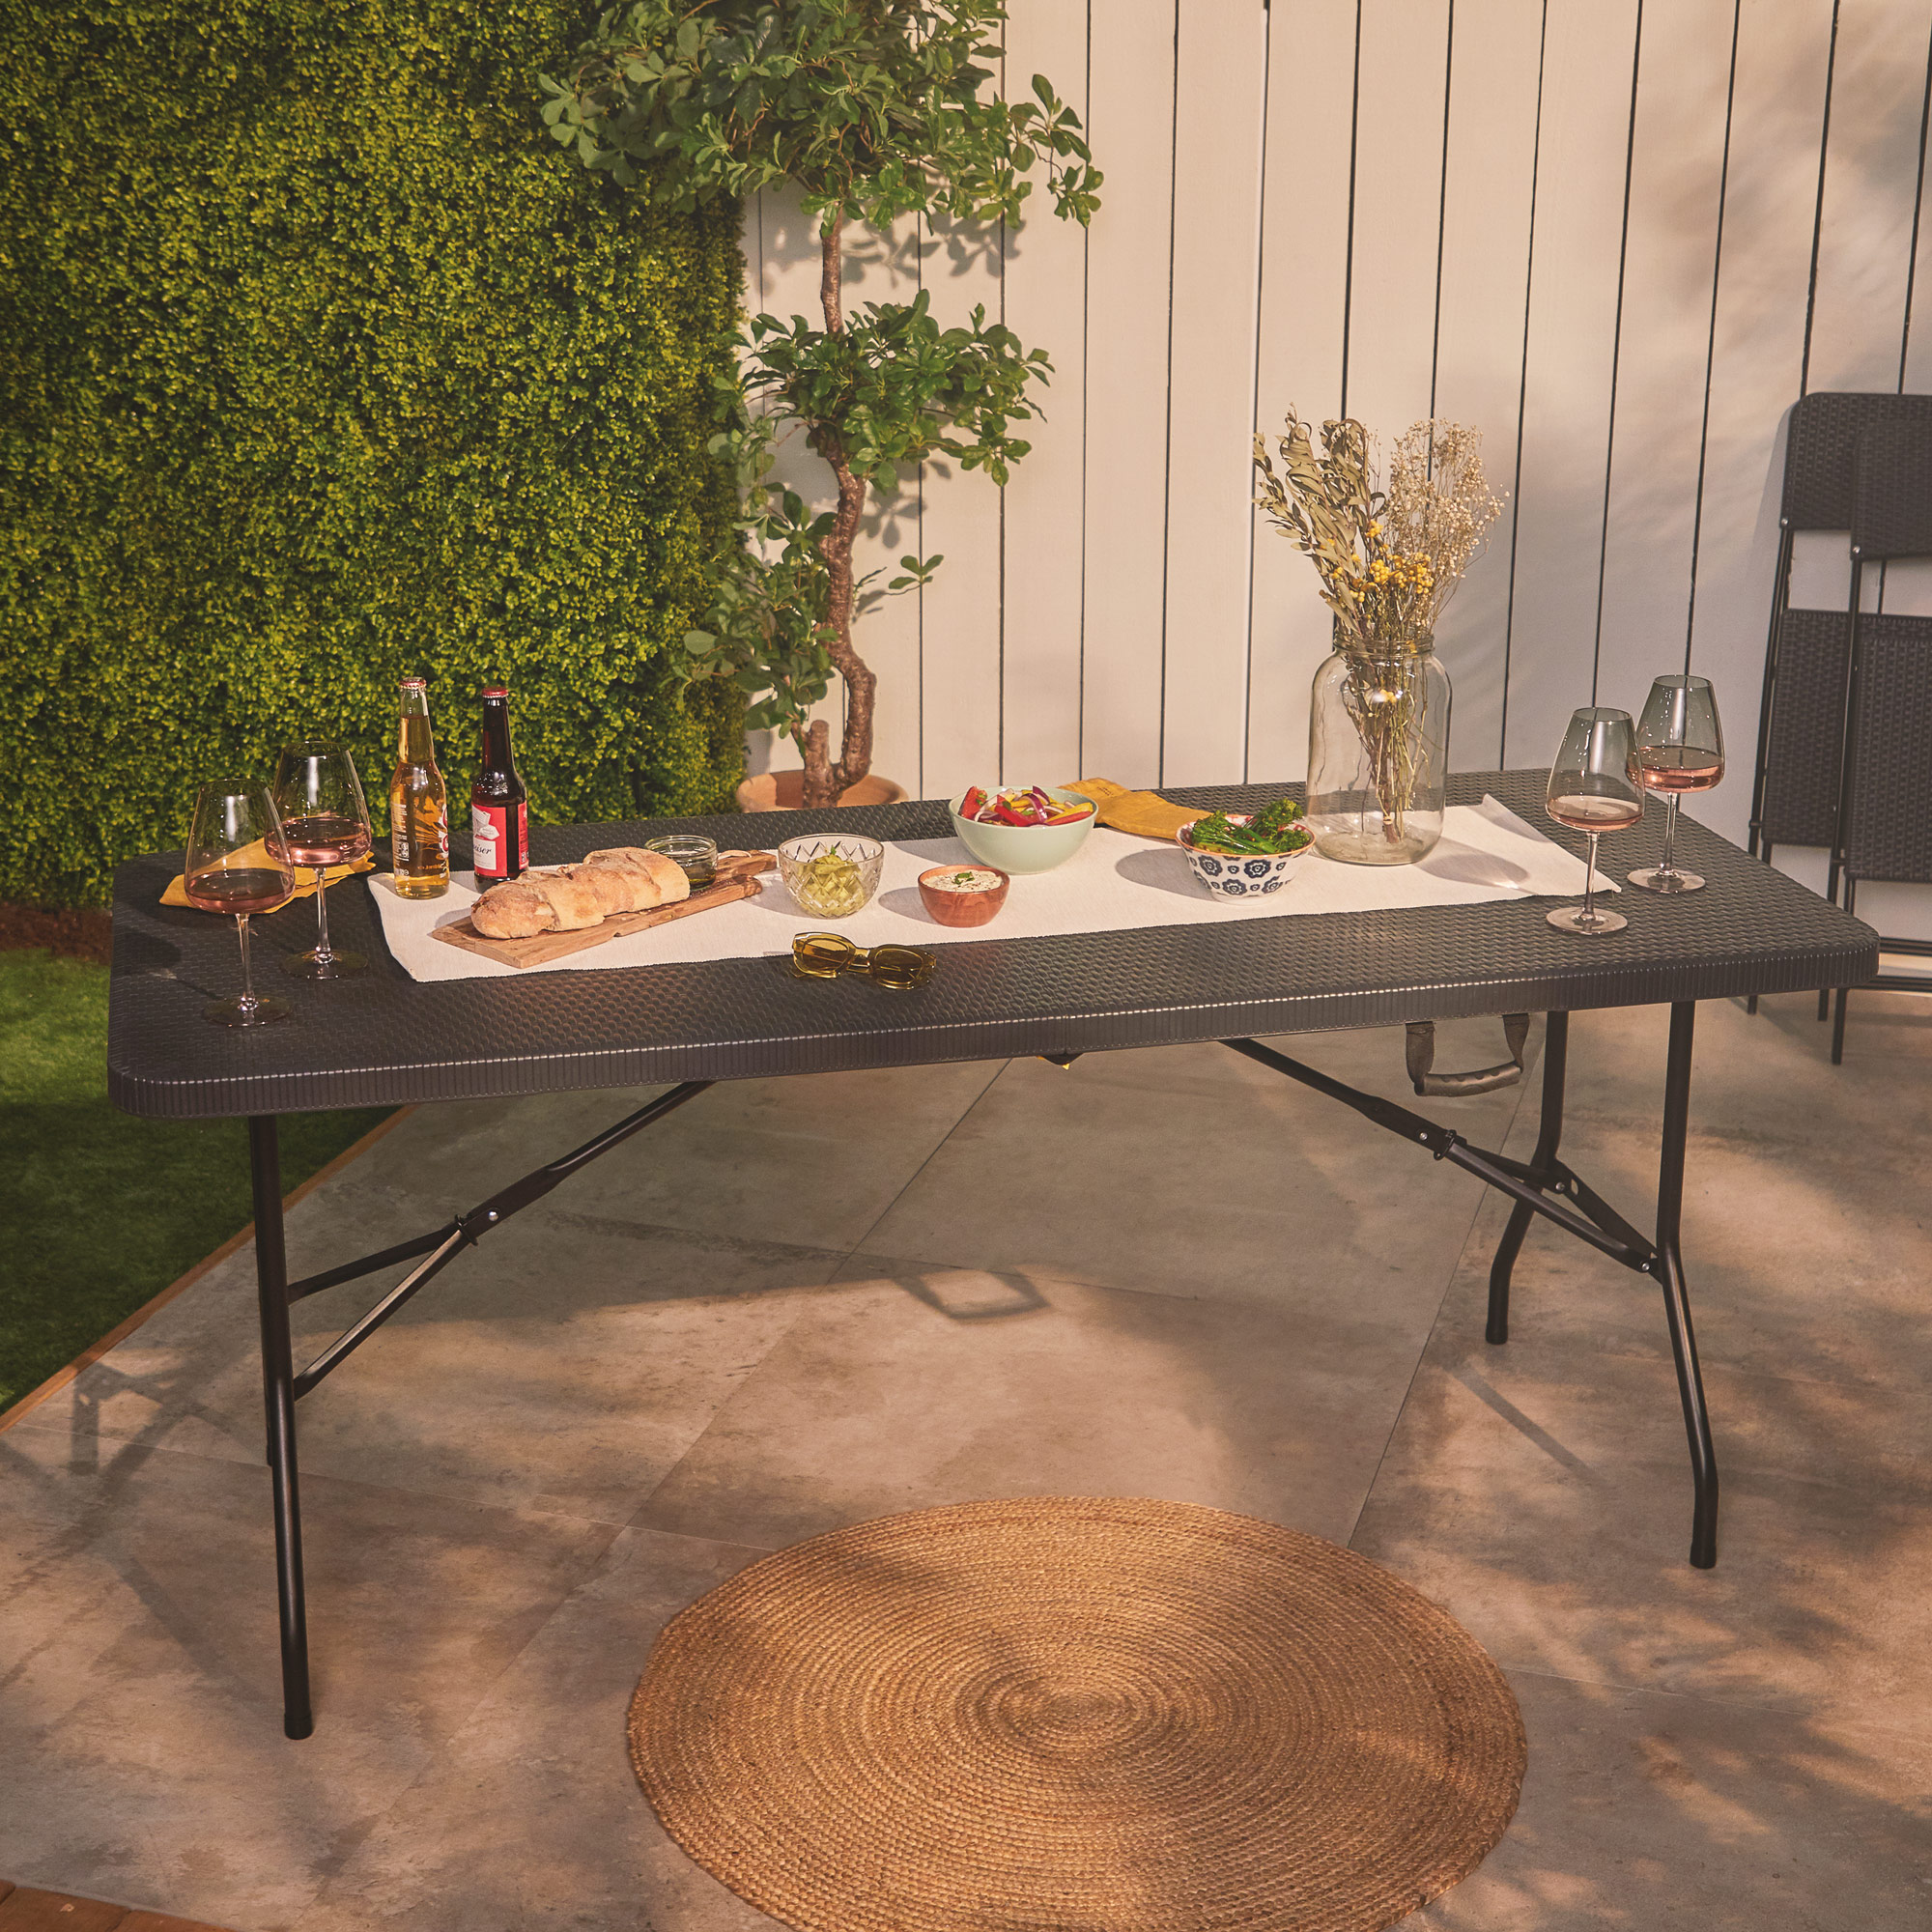 VonHaus 6ft Rattan Effect Folding Table – Durable Outdoor Garden